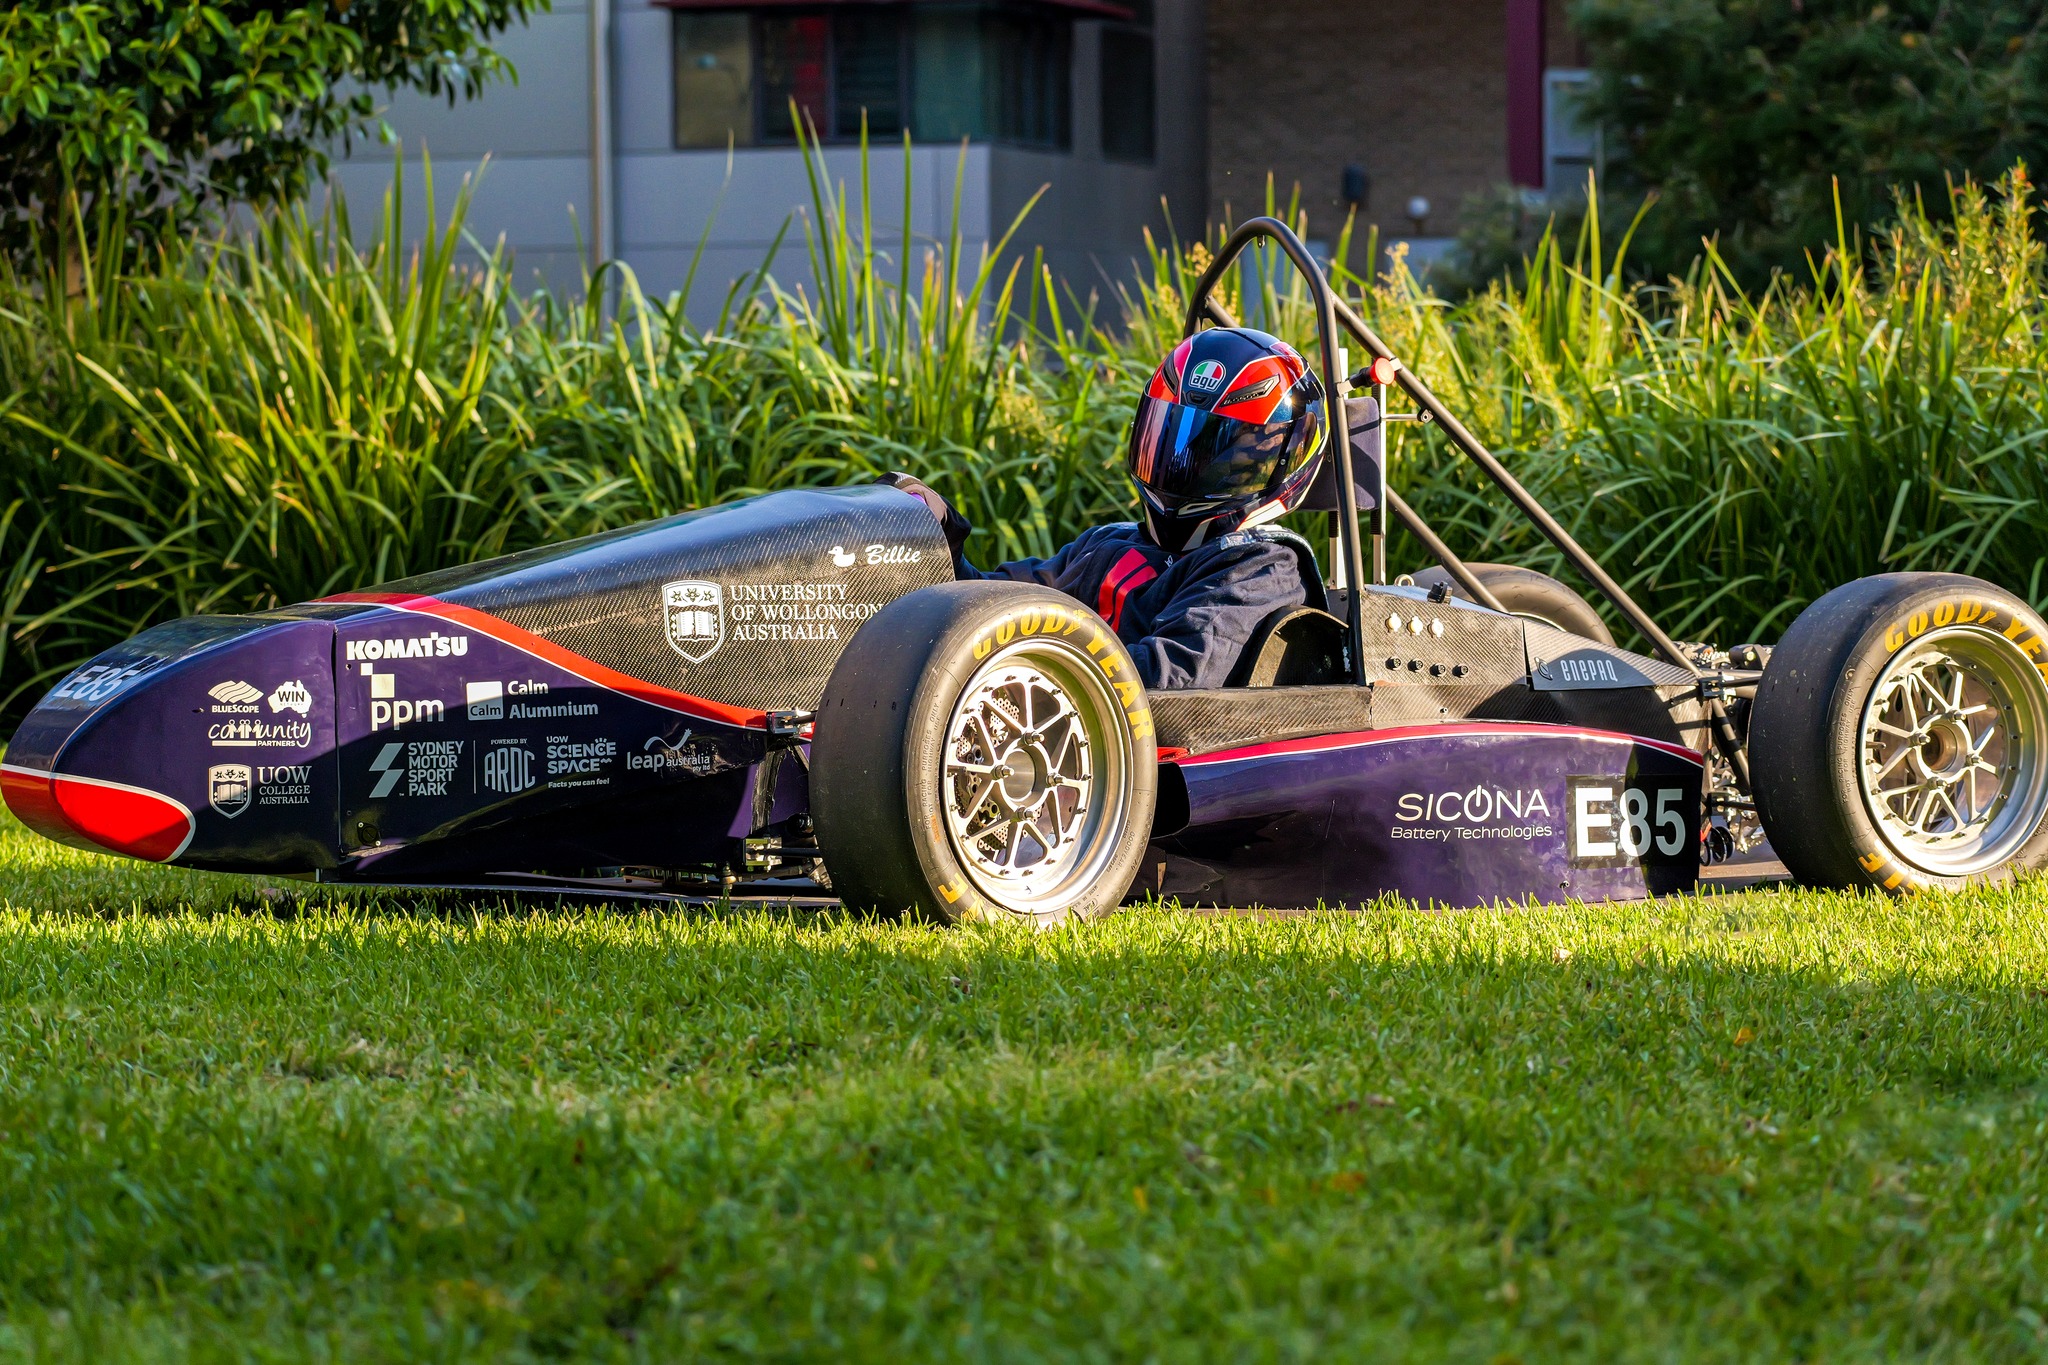 Students unveil formulastyle electric vehicle Engineers Australia